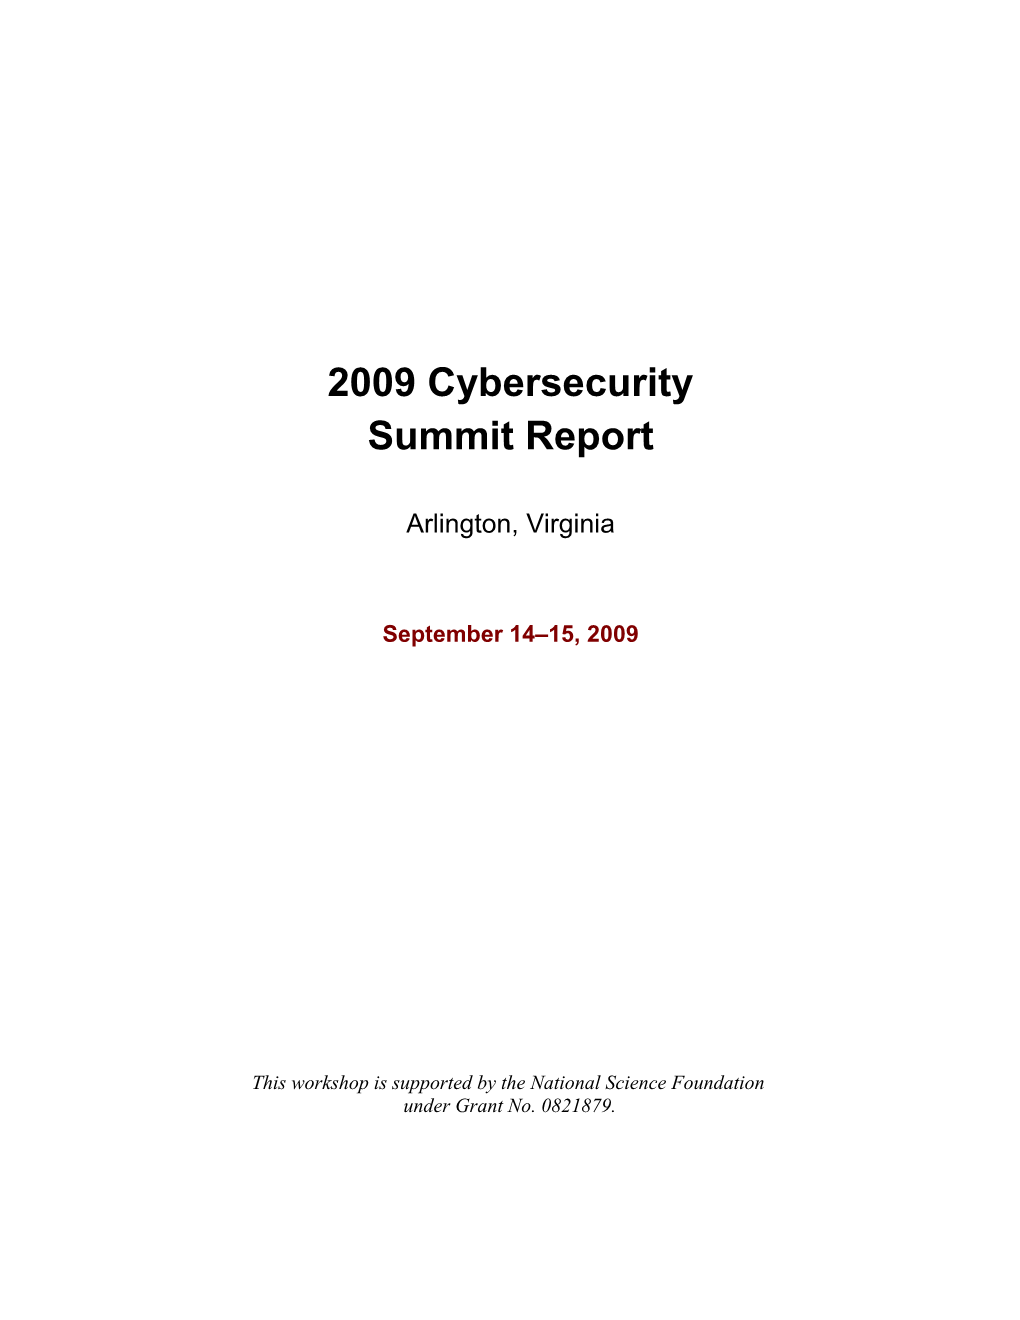 2009 Cybersecurity Summit Program Committee